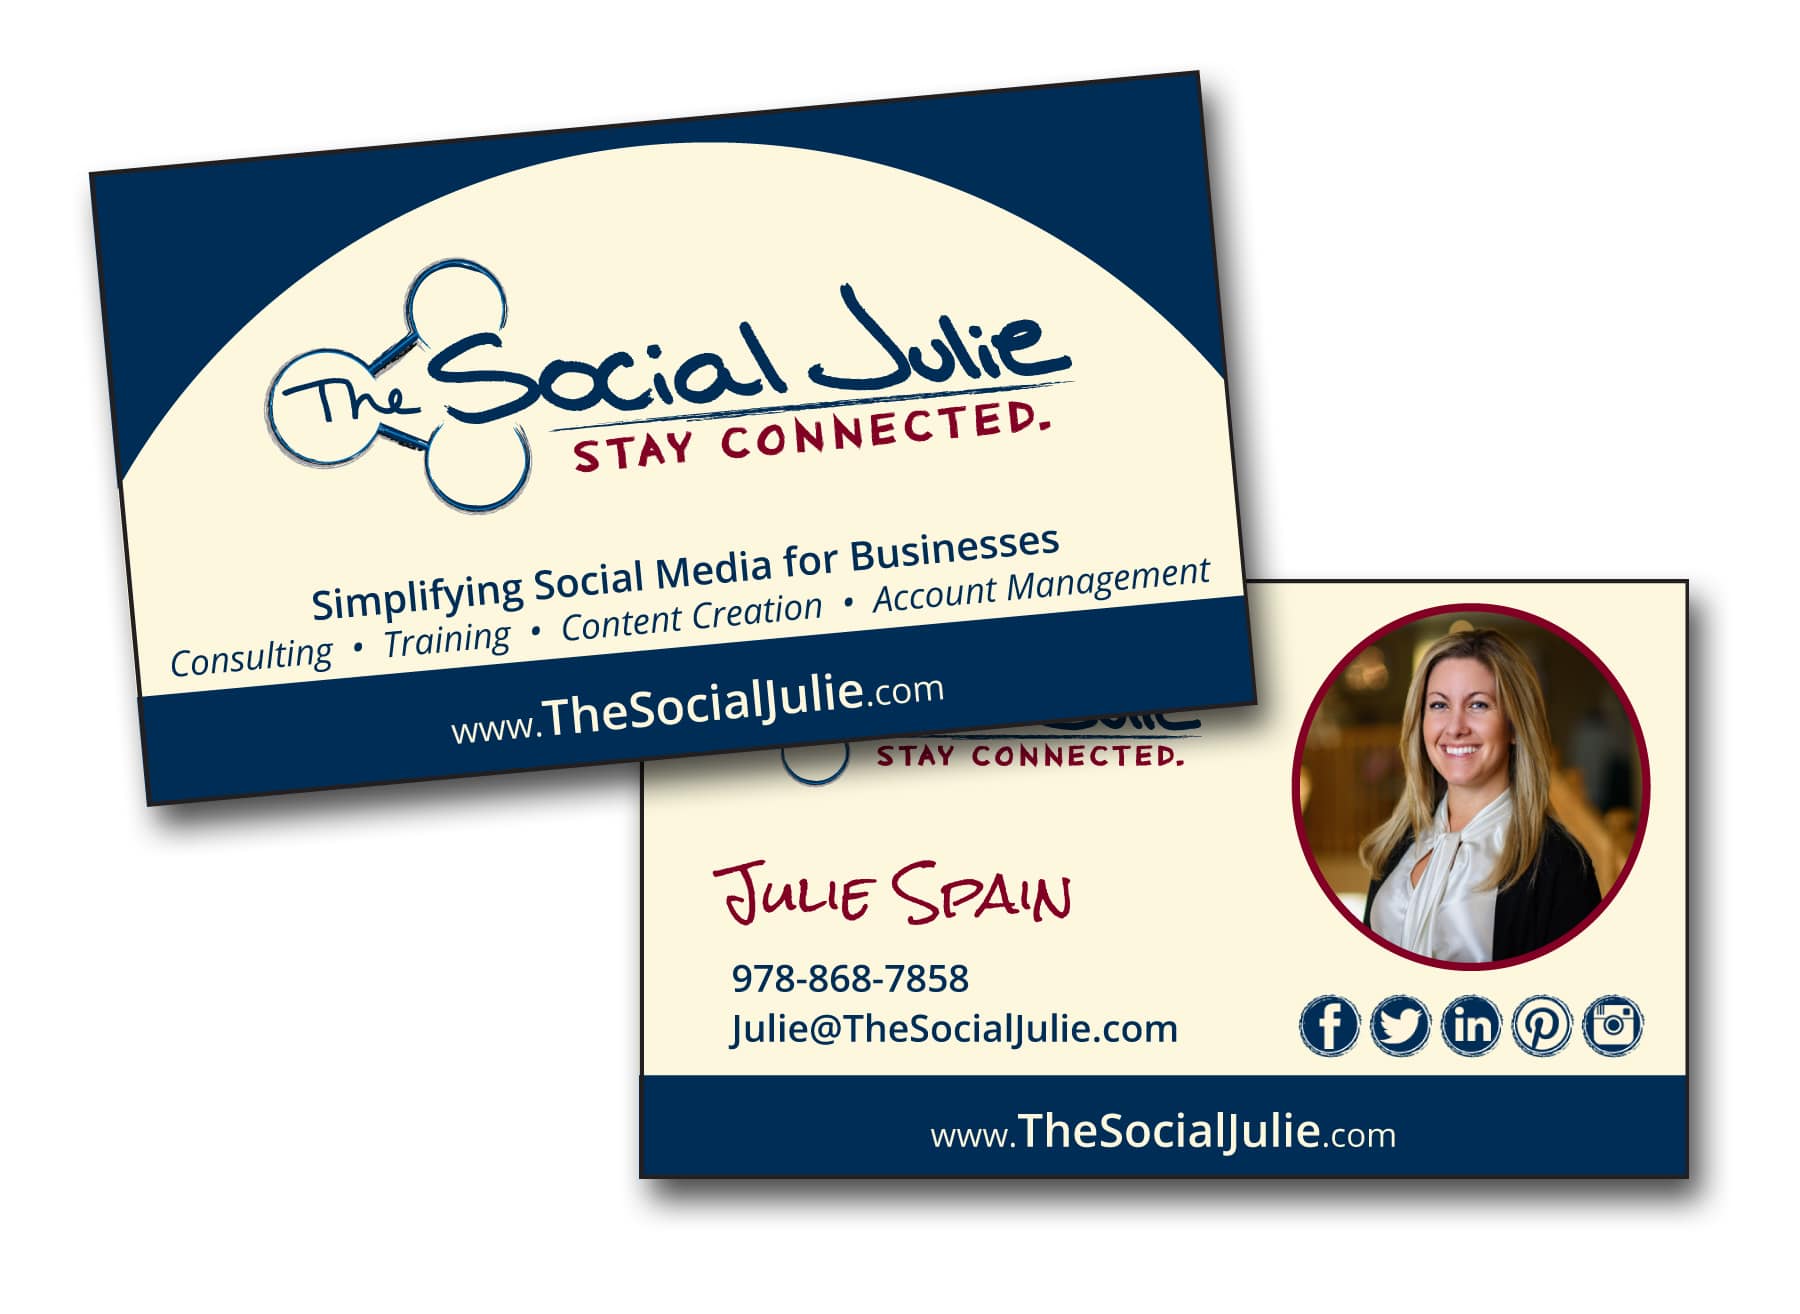 The Social Julie